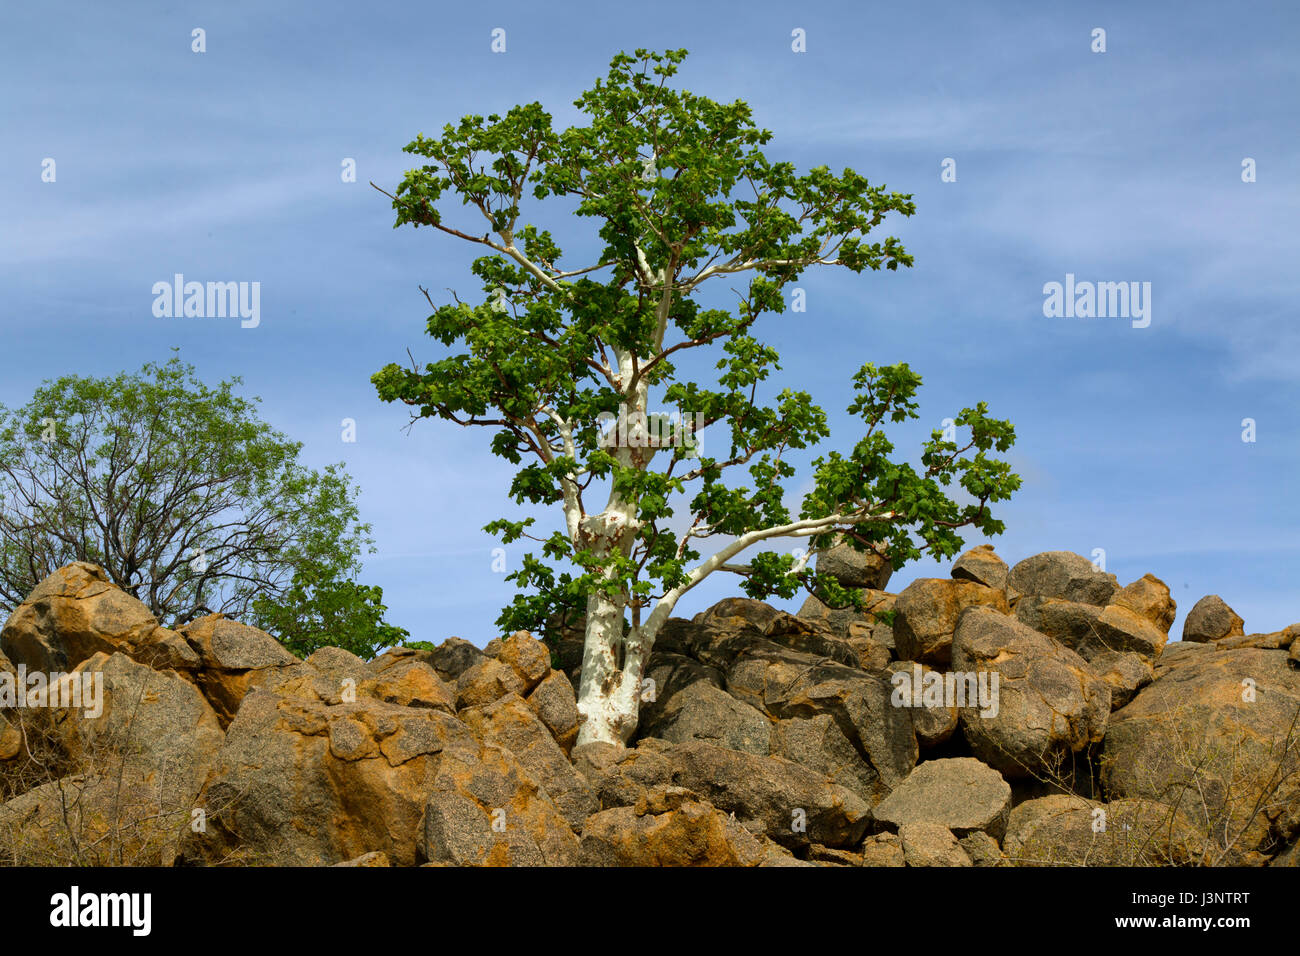 Sterculia quinqueloba tree growing on rocky hillside, Namibia Stock Photo